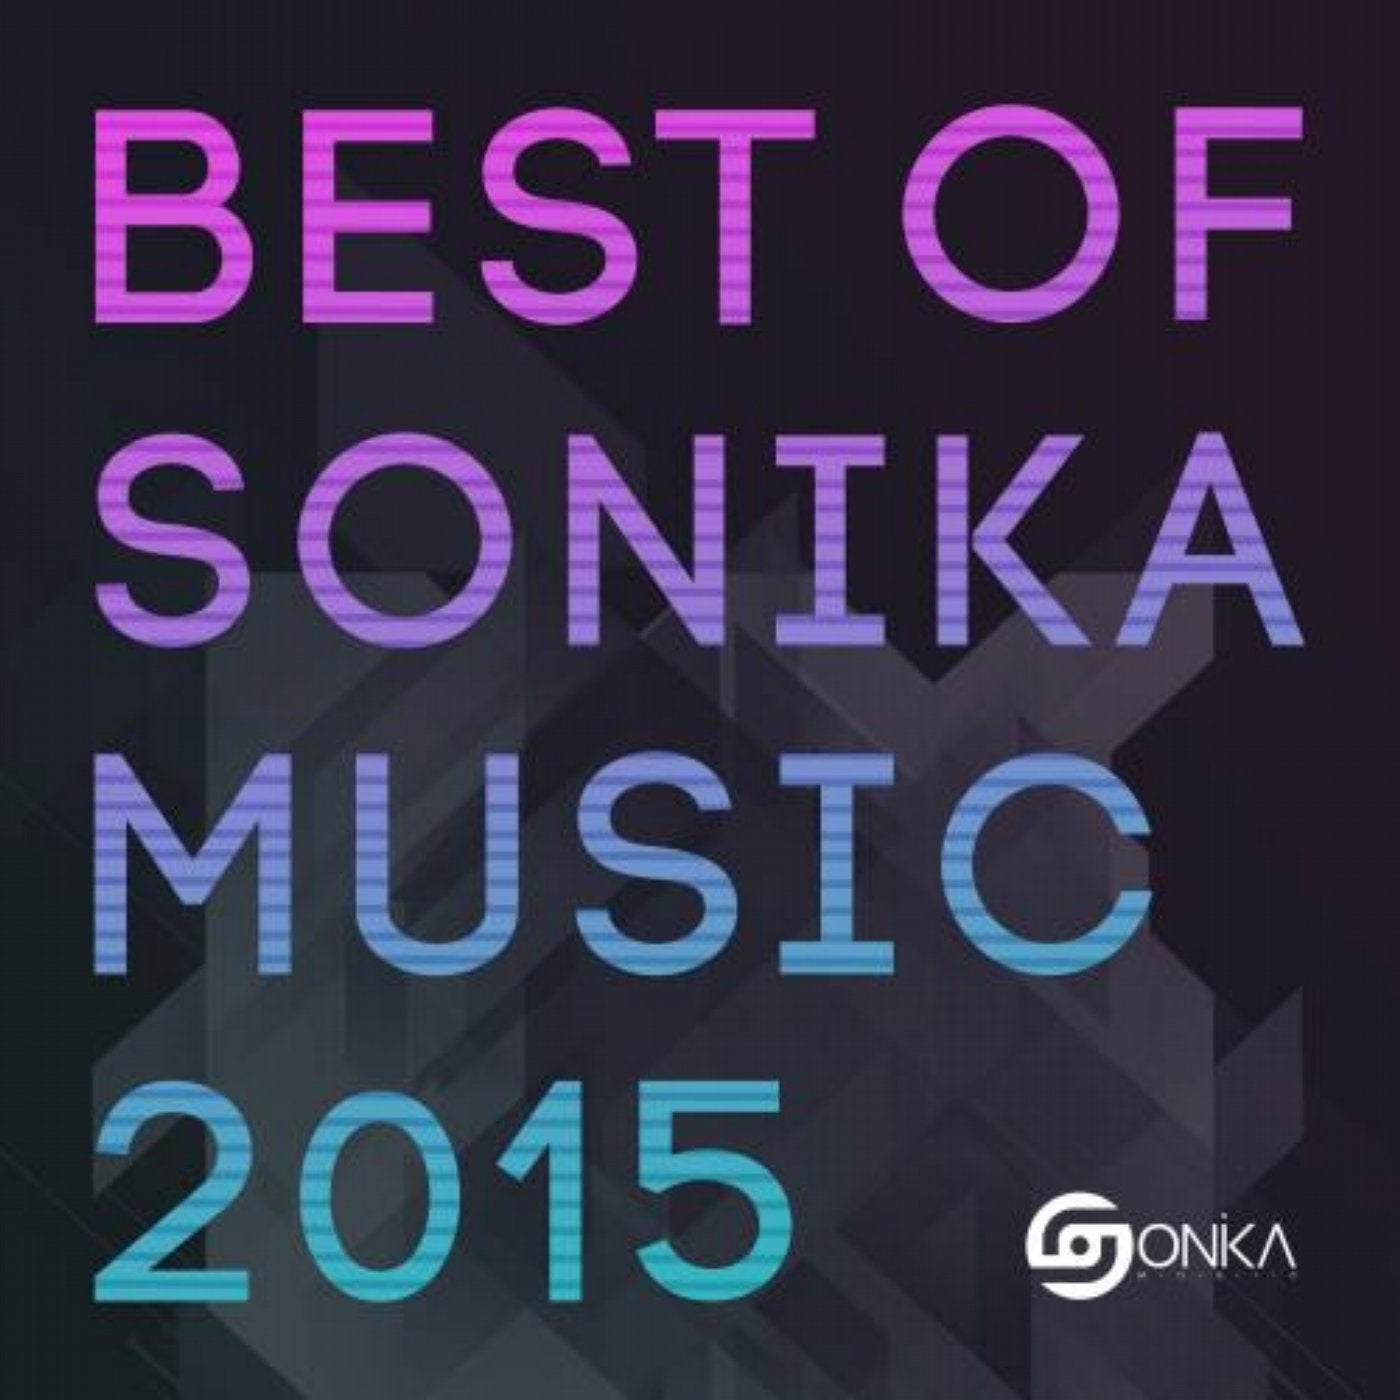 Best Of Sonika Music 2015